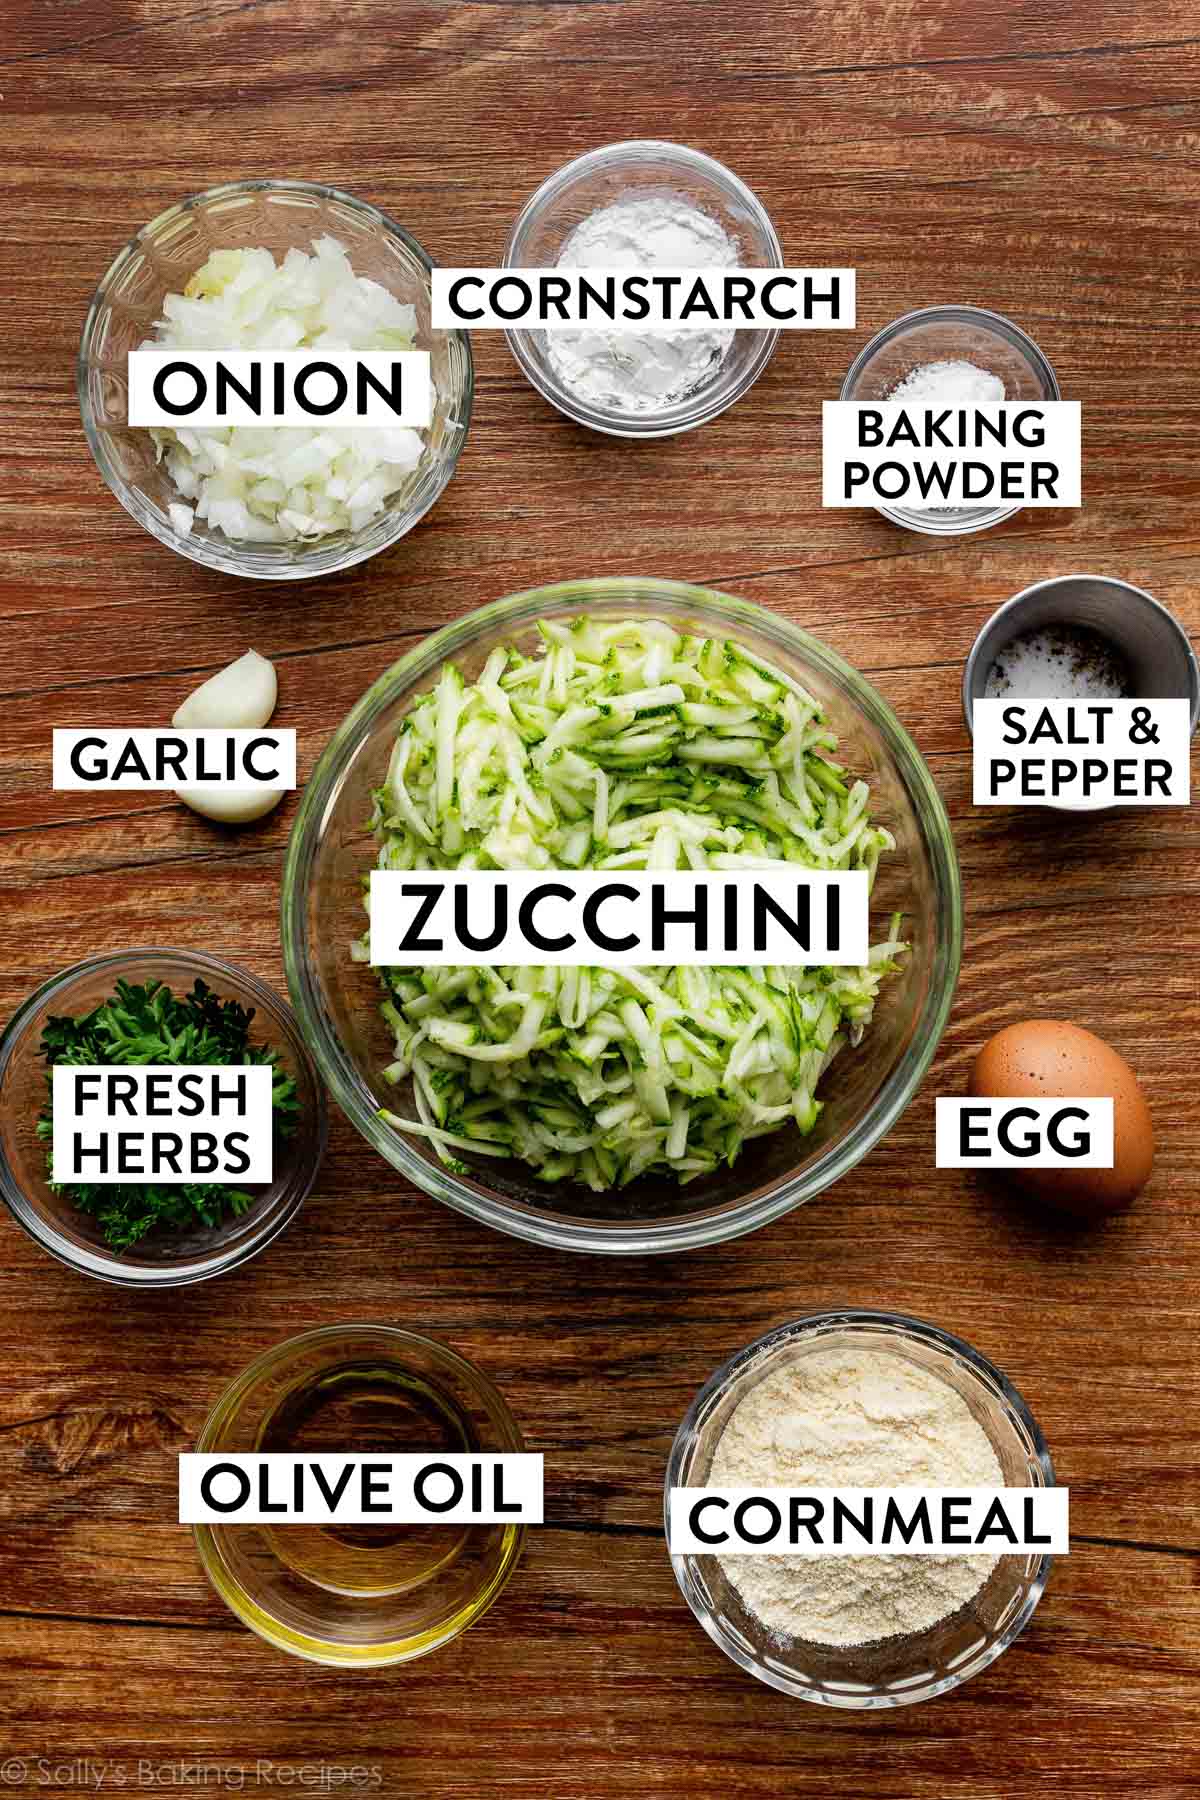 bowls of ingredients on wooden backdrop including shredded zucchini, chopped onion, cornstarch, cornmeal, baking powder, fresh herbs, egg, and garlic.